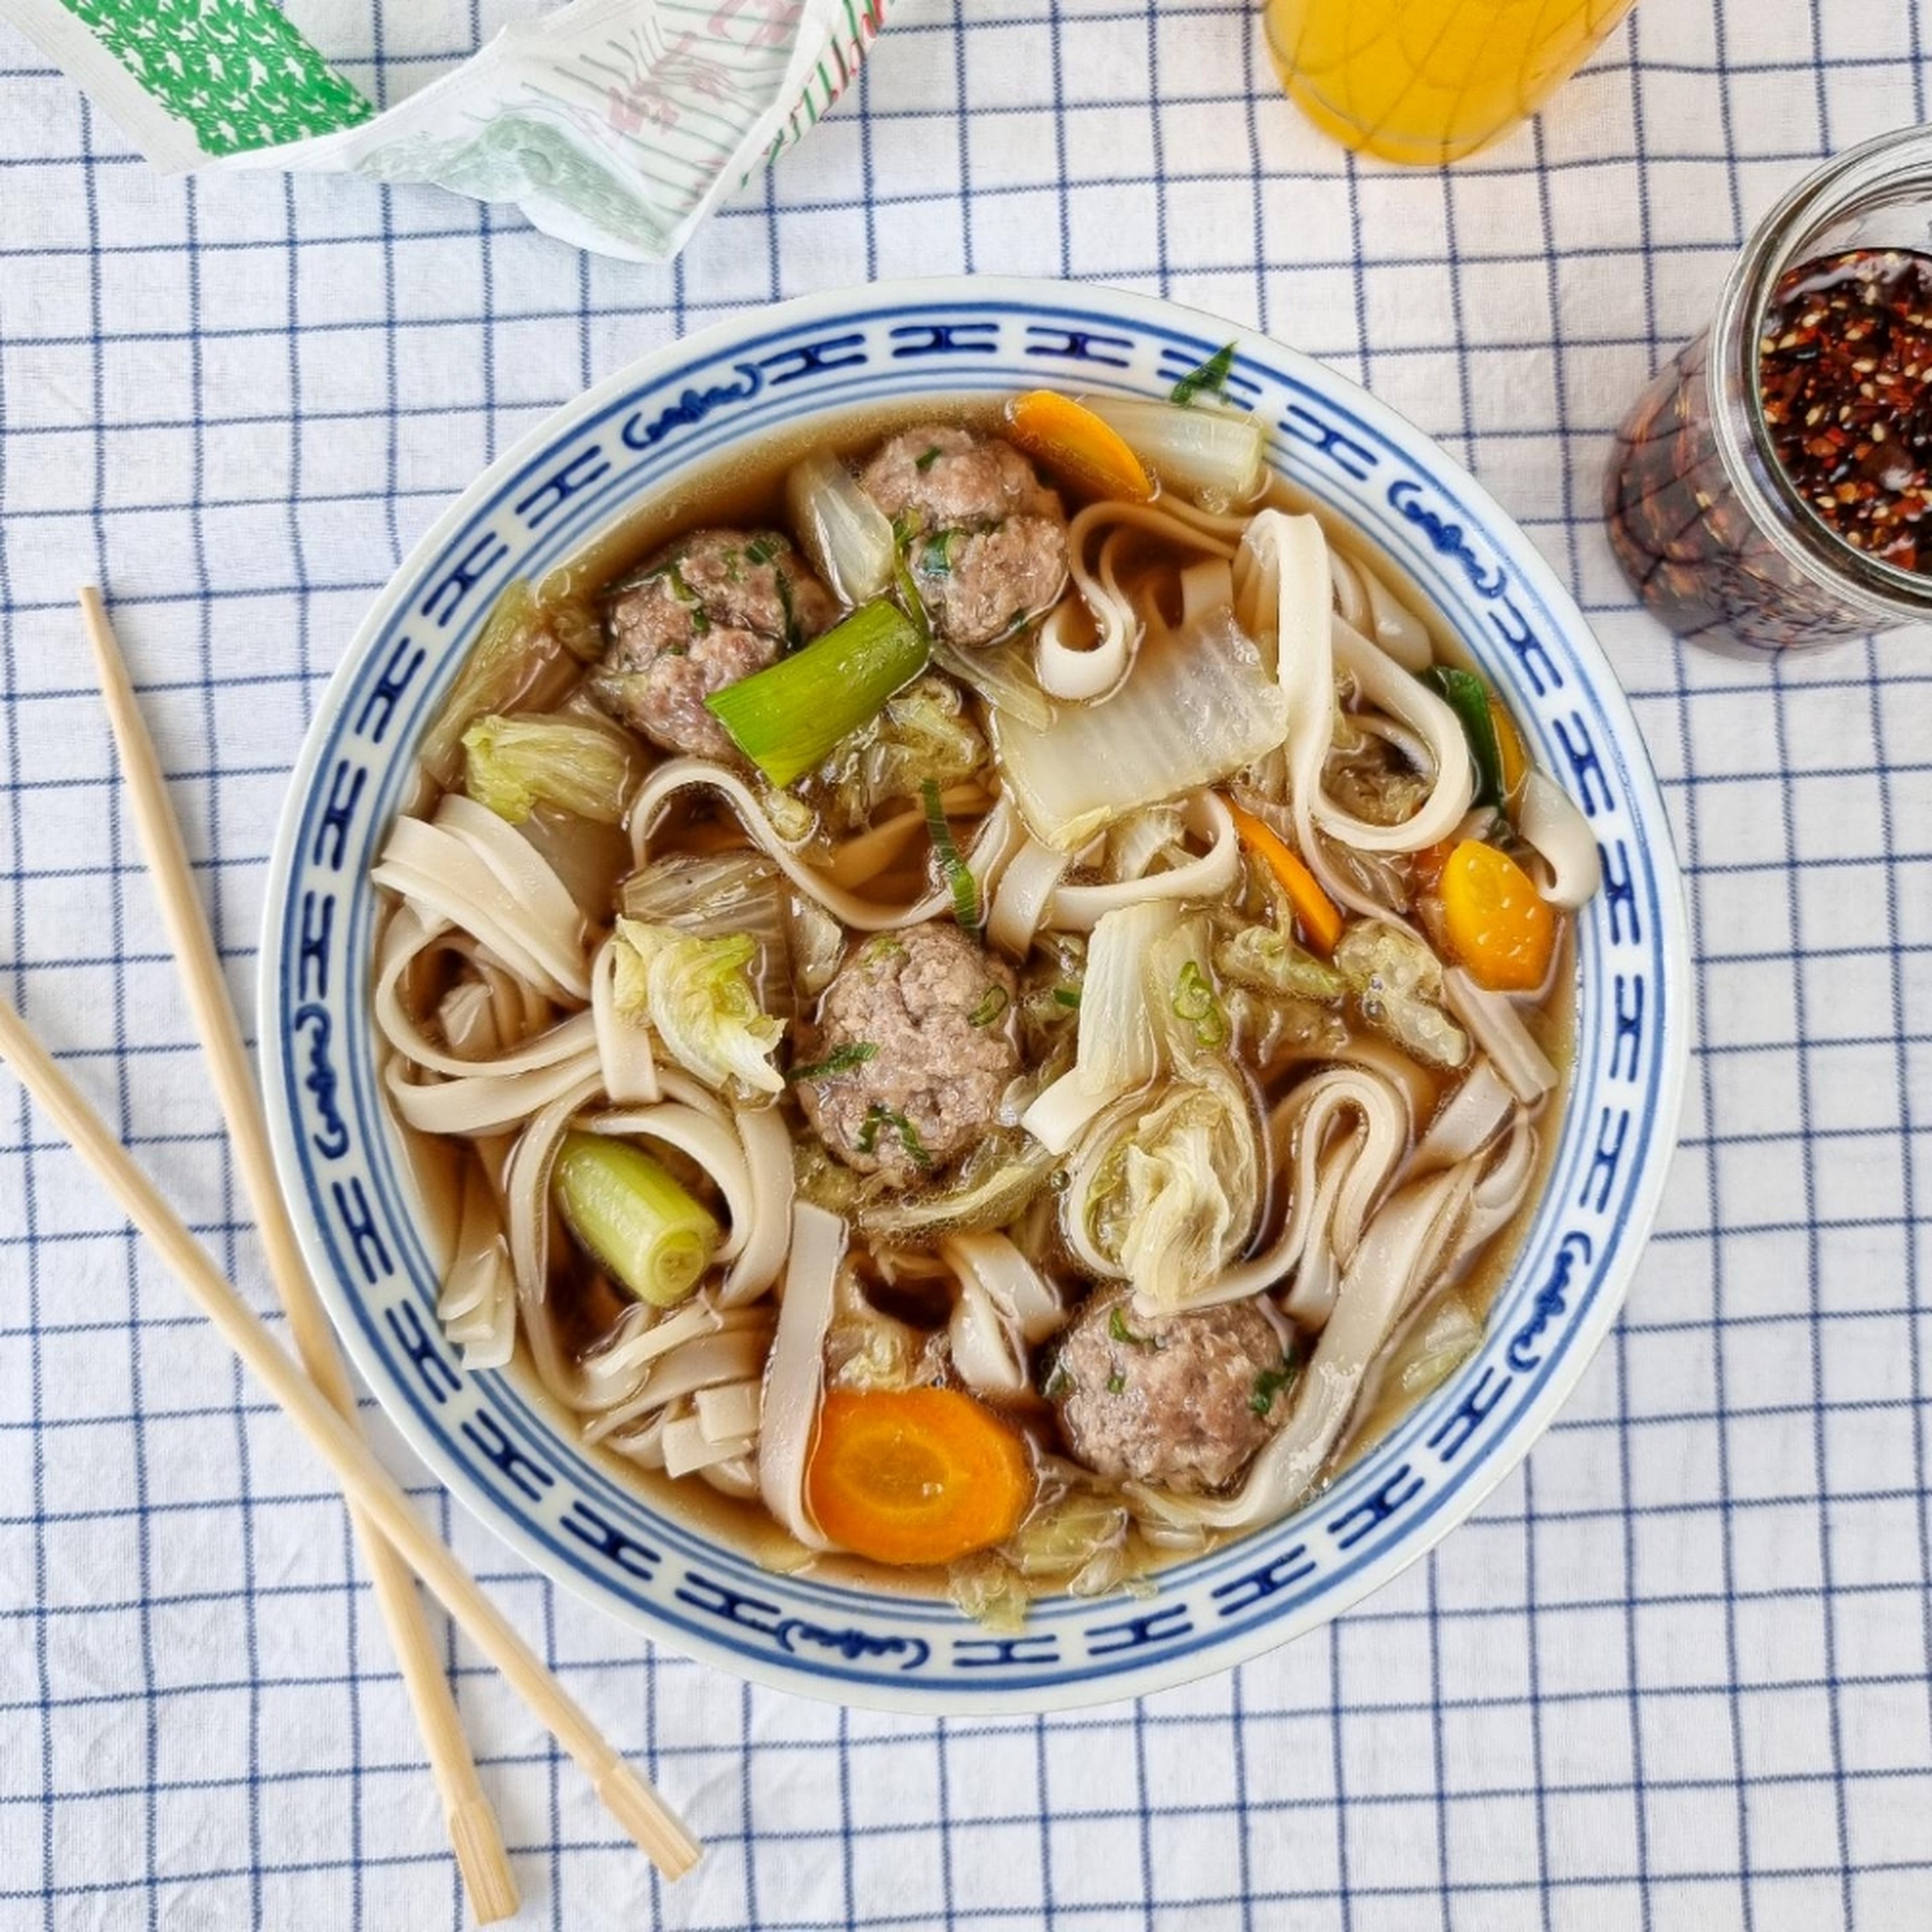 Noodle soup with meatballs